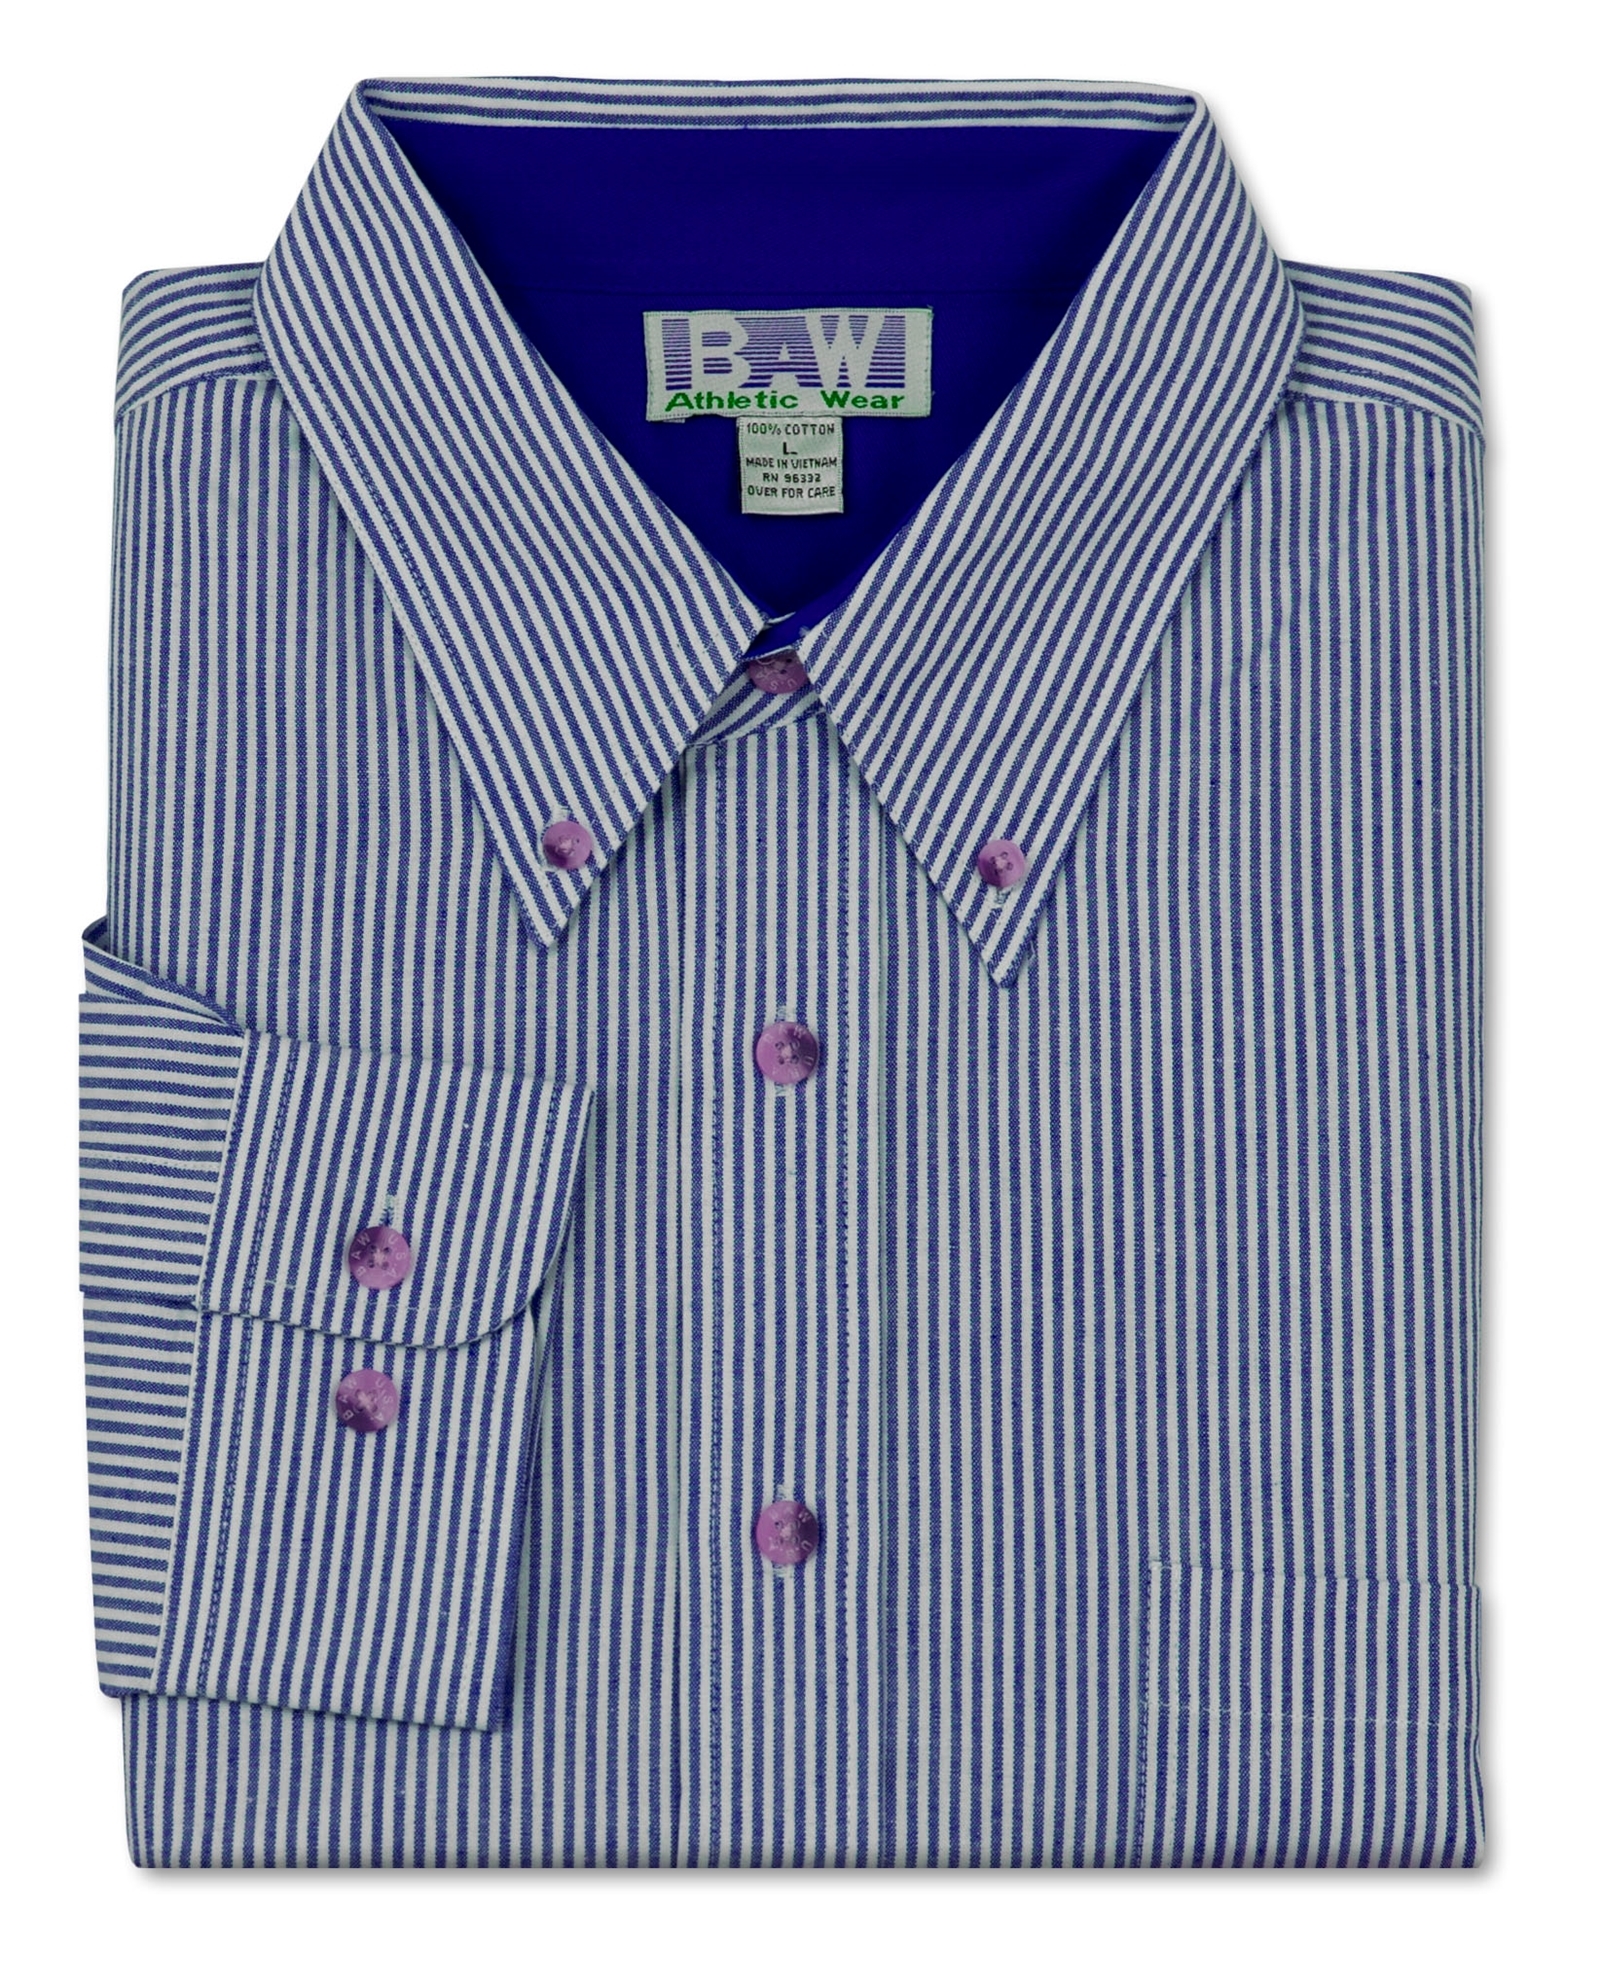 BAW Athletic Wear G450 - Men's Classic Stripe Gingham Shirt